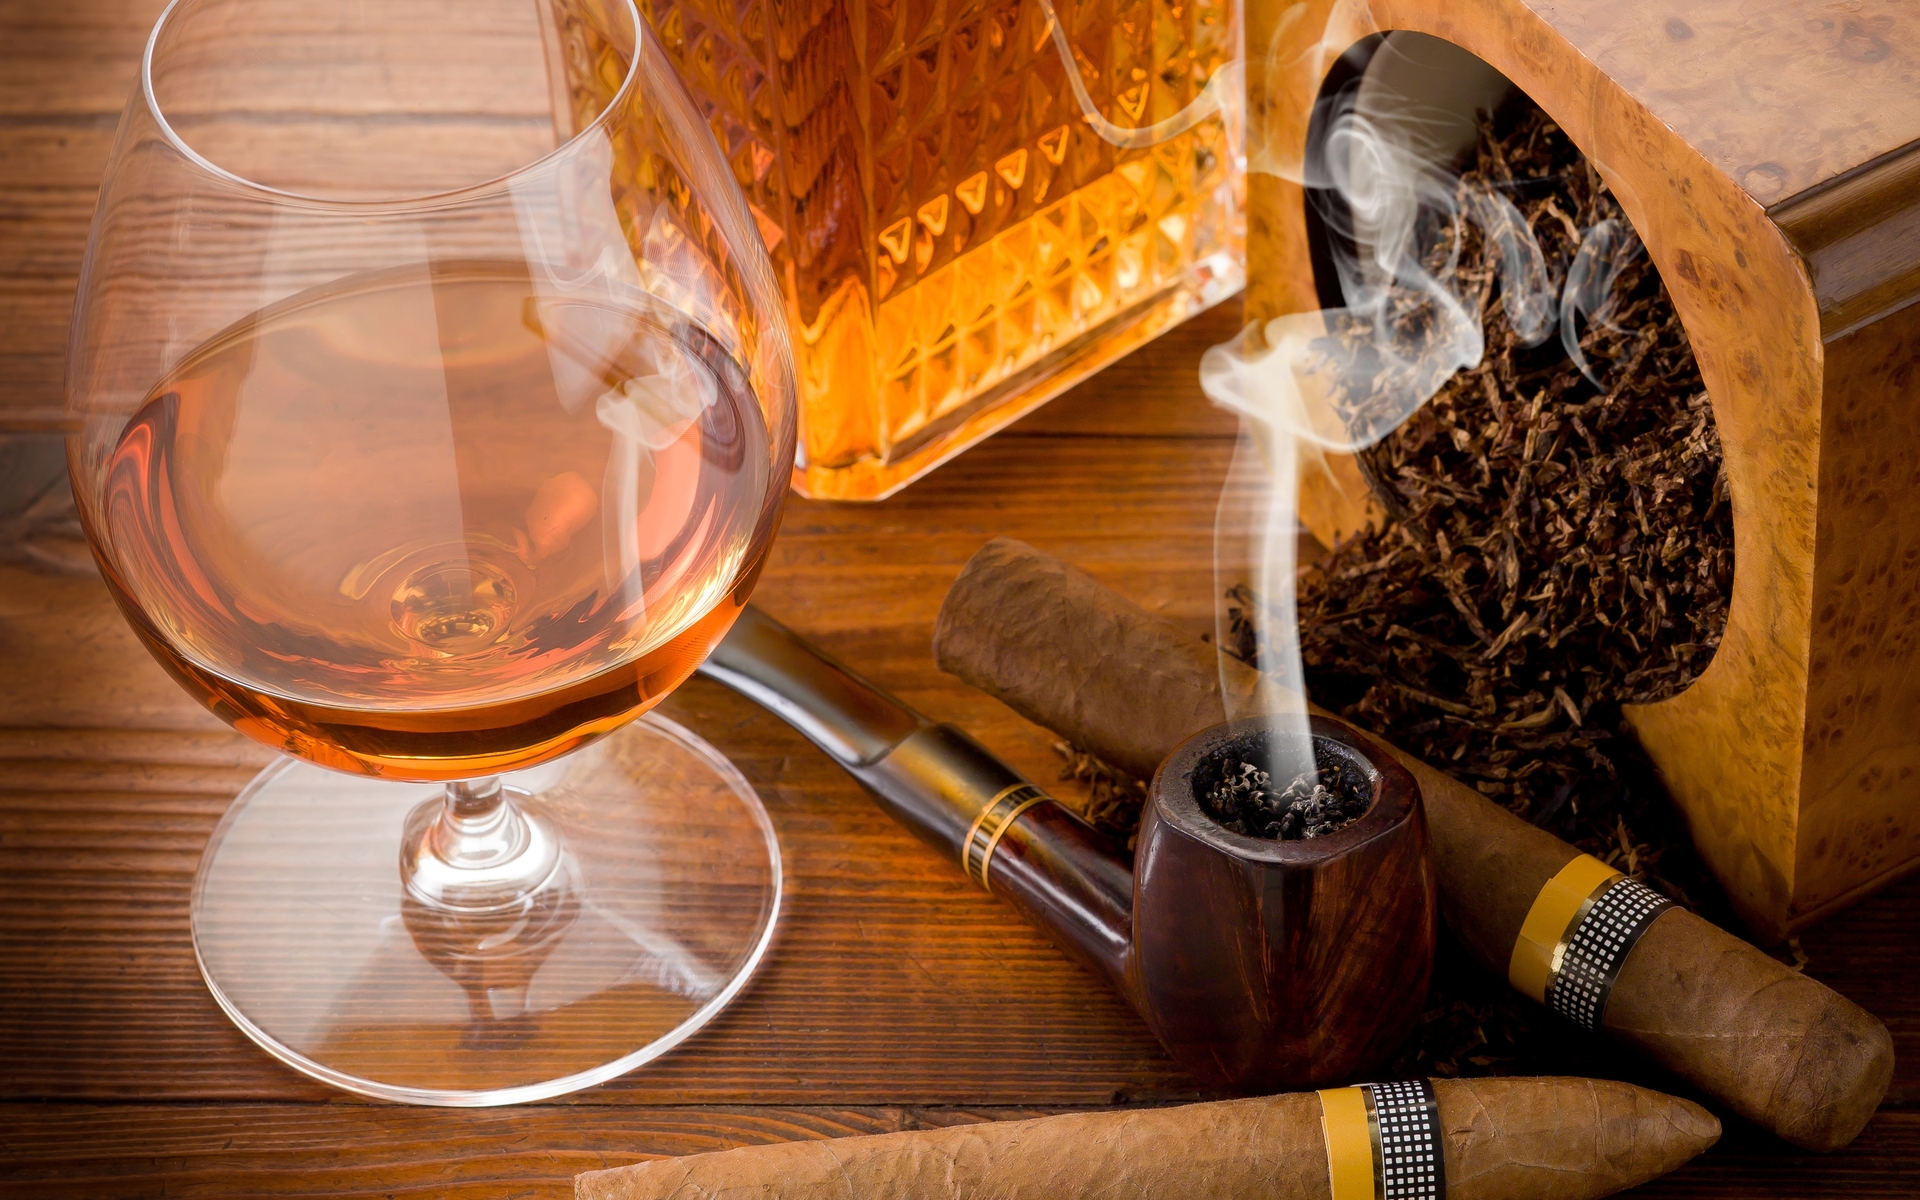 smoking pipe, food, whisky, brandy, cigar, glass, table